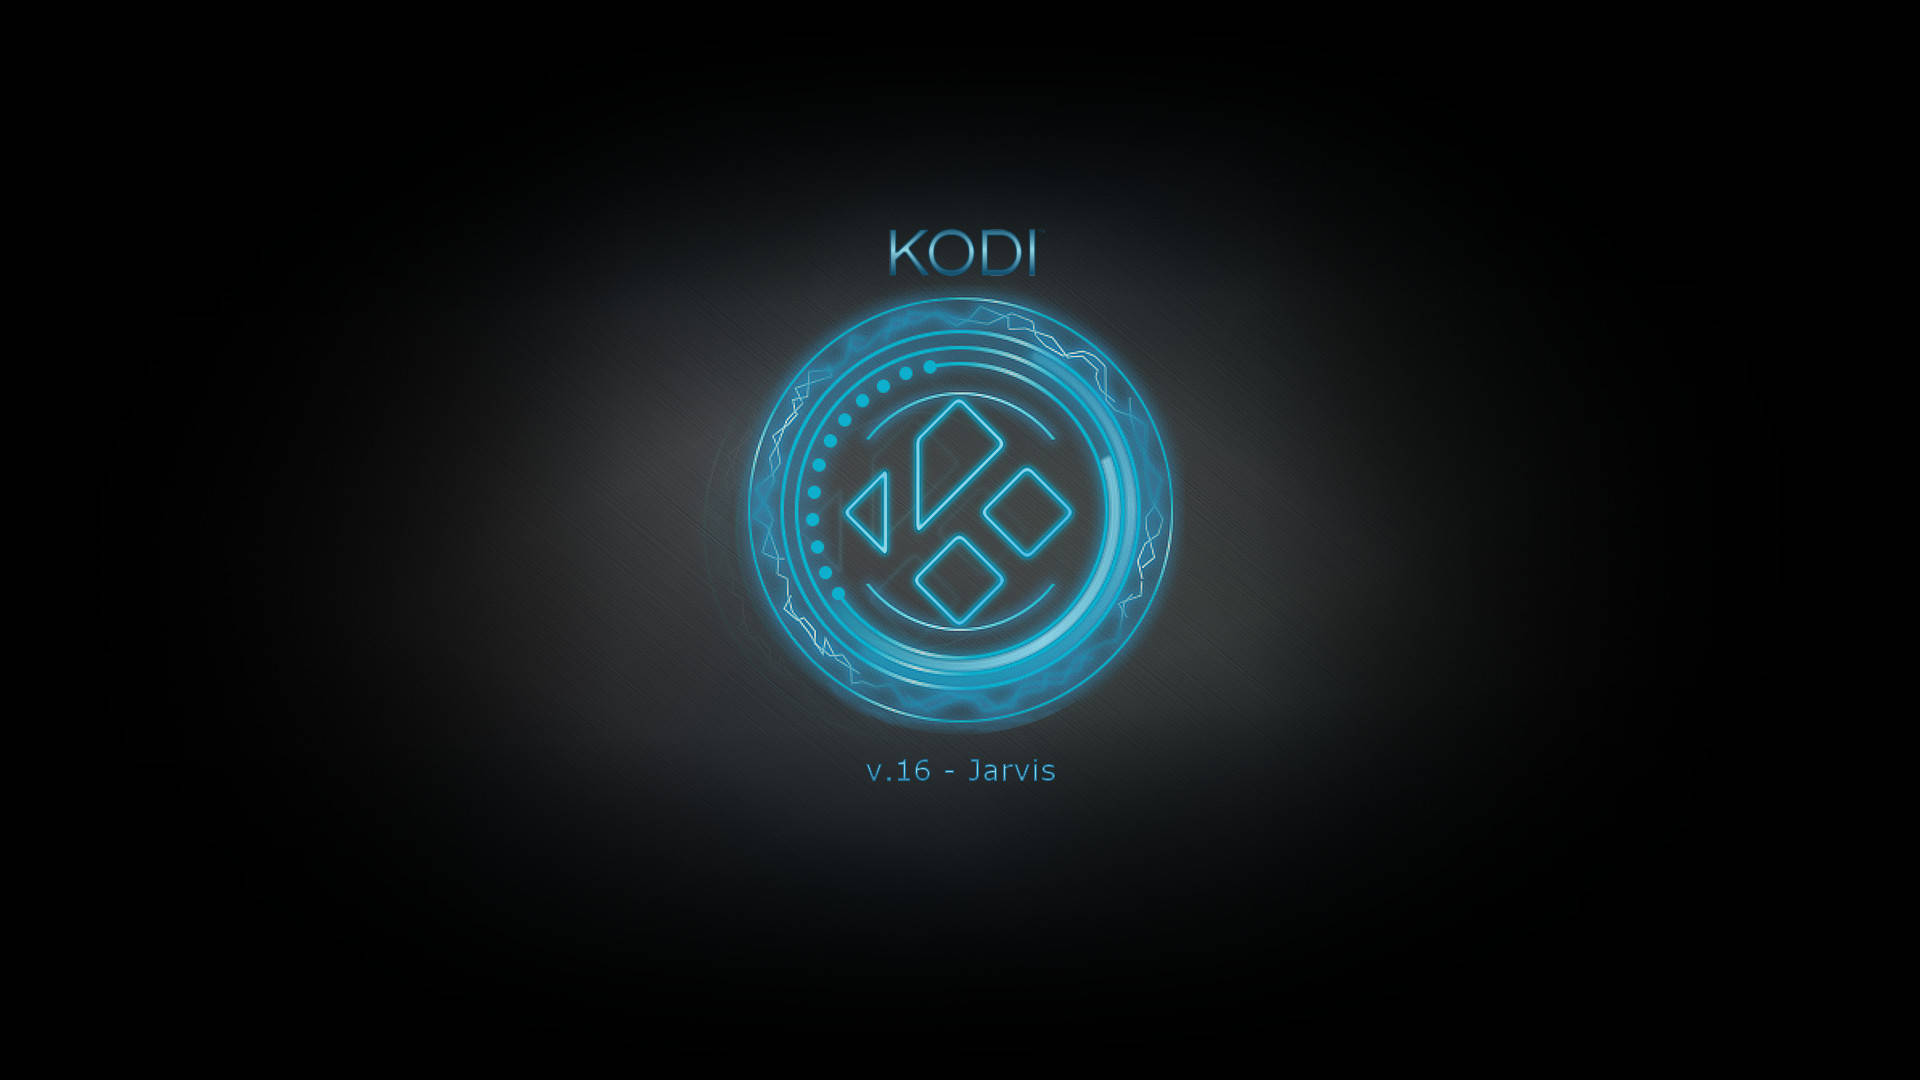 Blue Kodi Logo With Dark Background Background